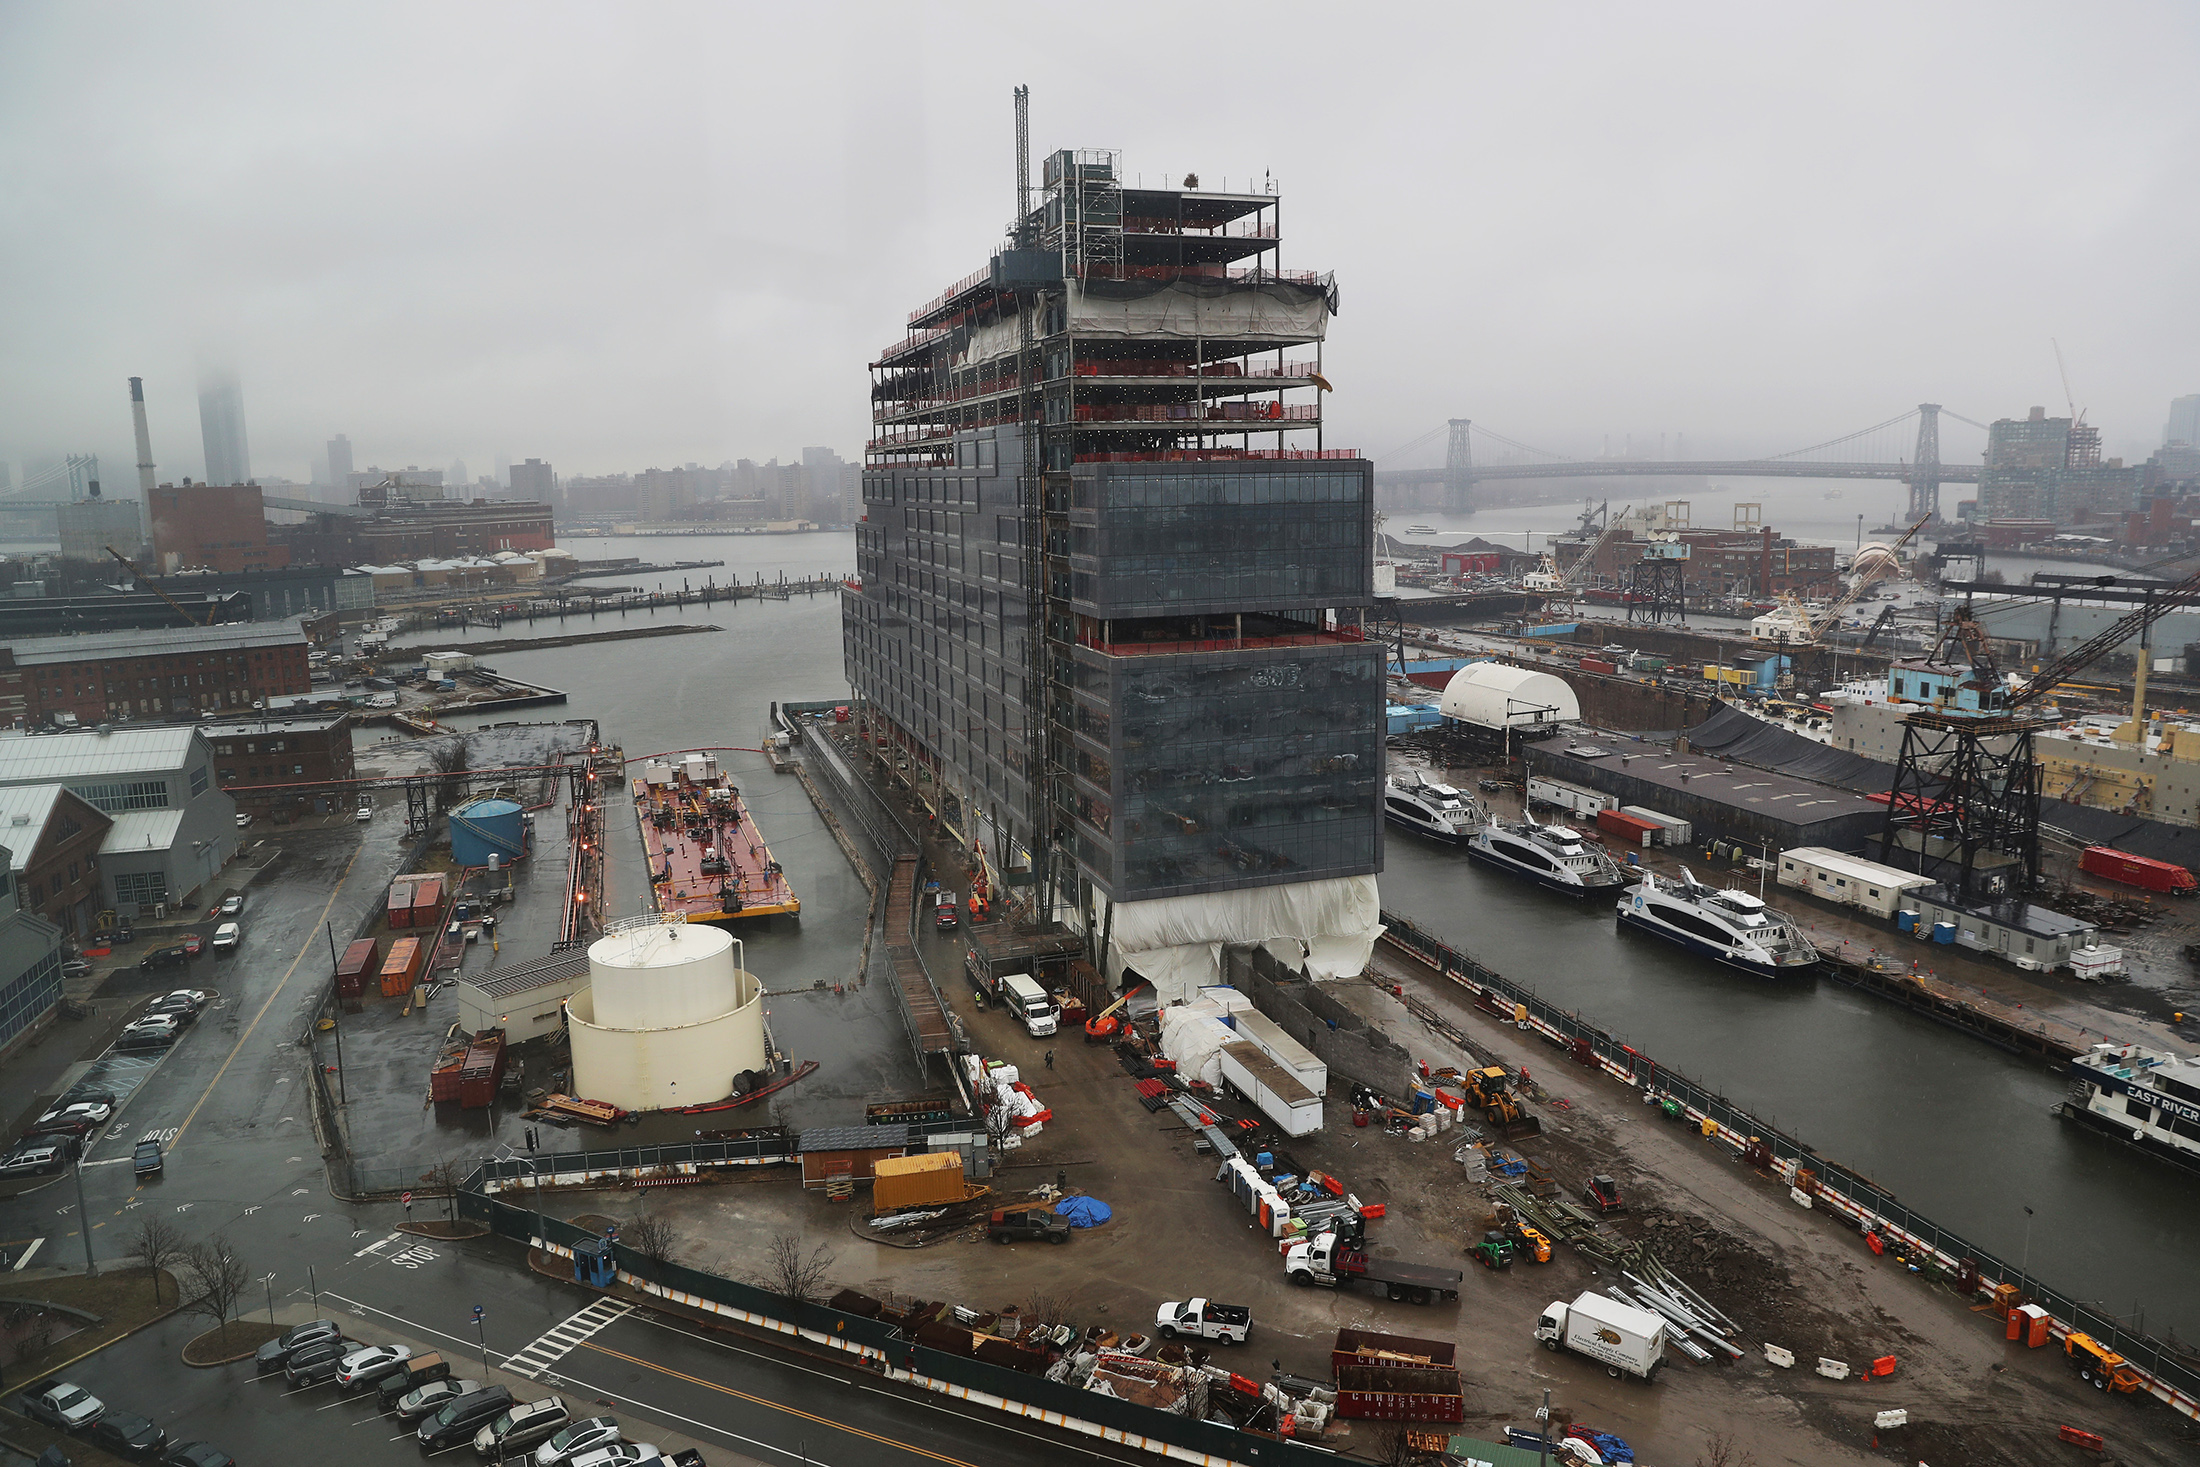 Construction on Dock 72 at the Brooklyn Navy Yard.